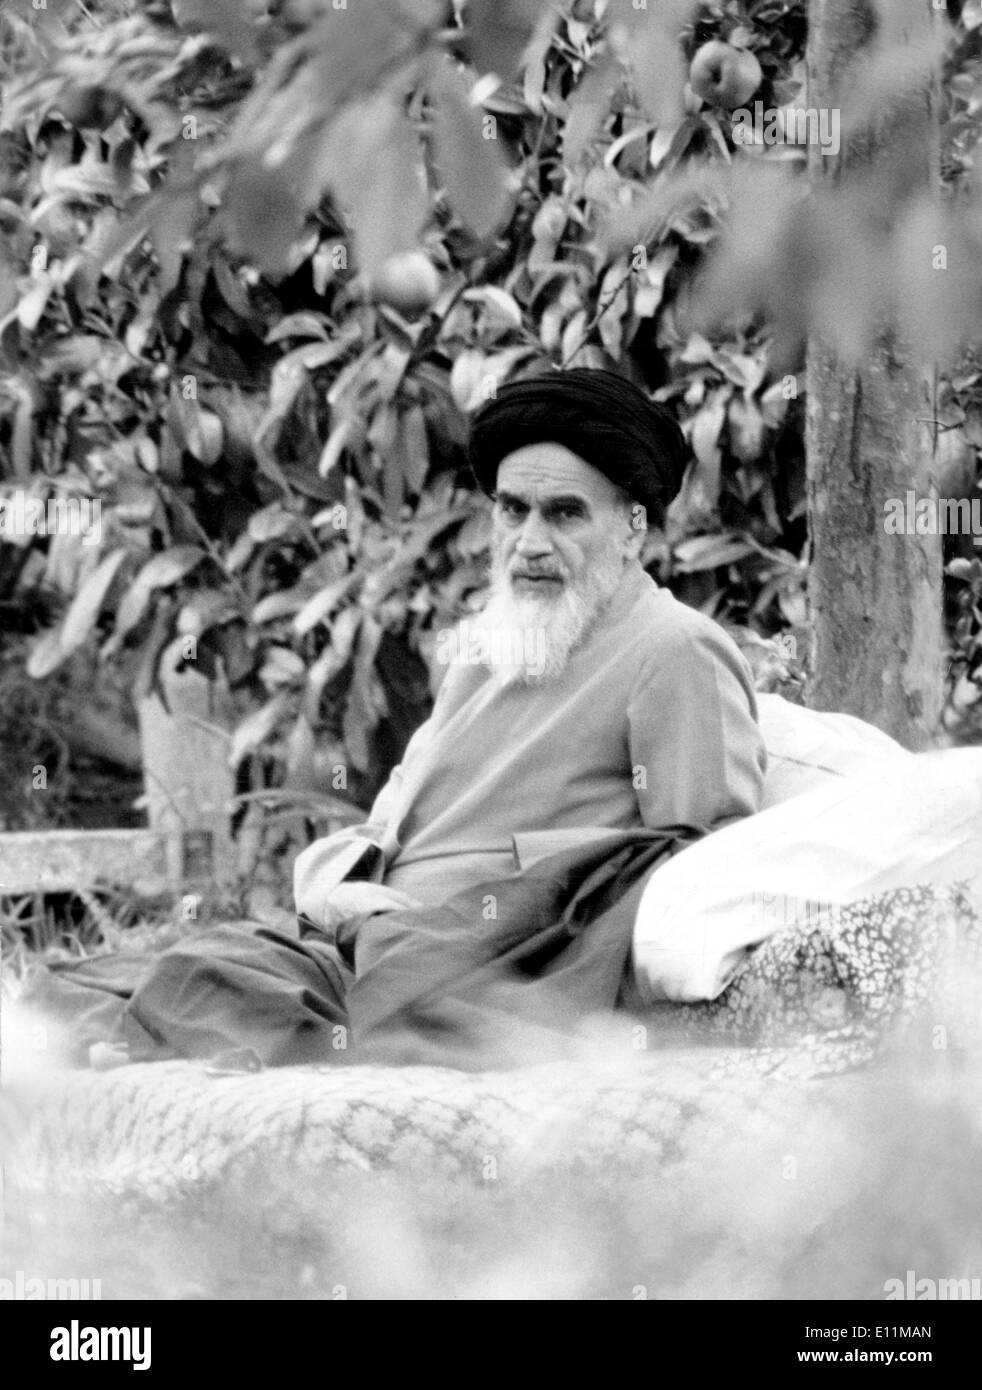 5084280 (900326) Ajatollah KHOMEINI, (24.09.1902 - 03.06.1989, Ruhollah Mussawi HENDI) iranischer Religionsf hrer und Stock Photo